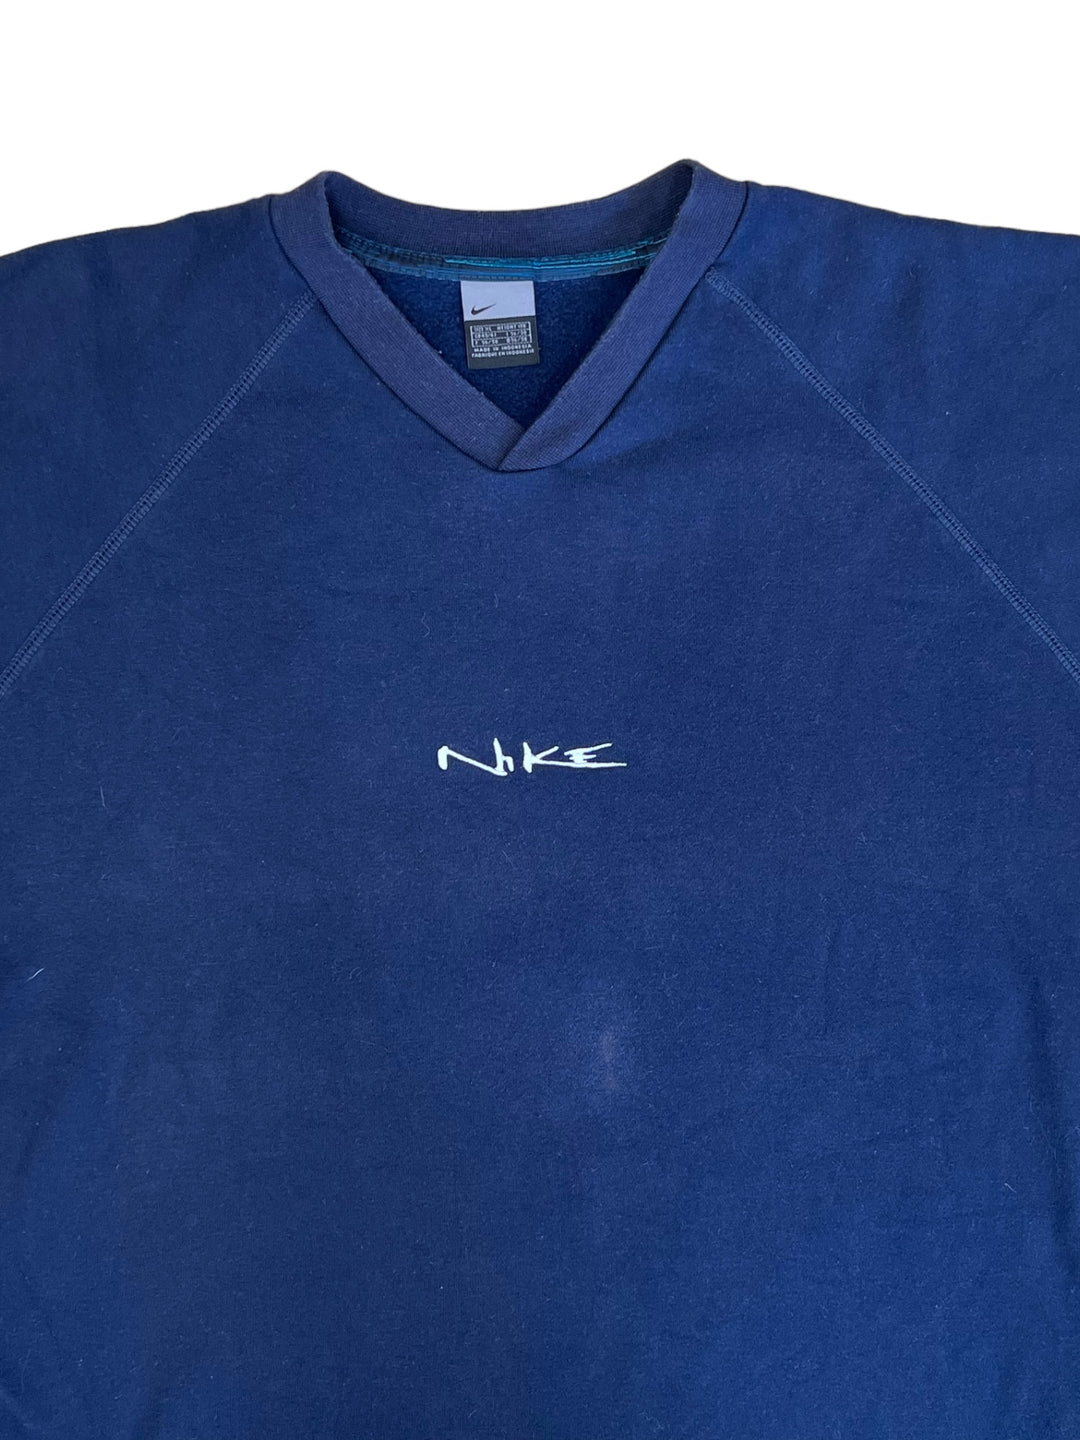 Nike 90’s embroidered logo navy sweatshirt men’s Extra Large